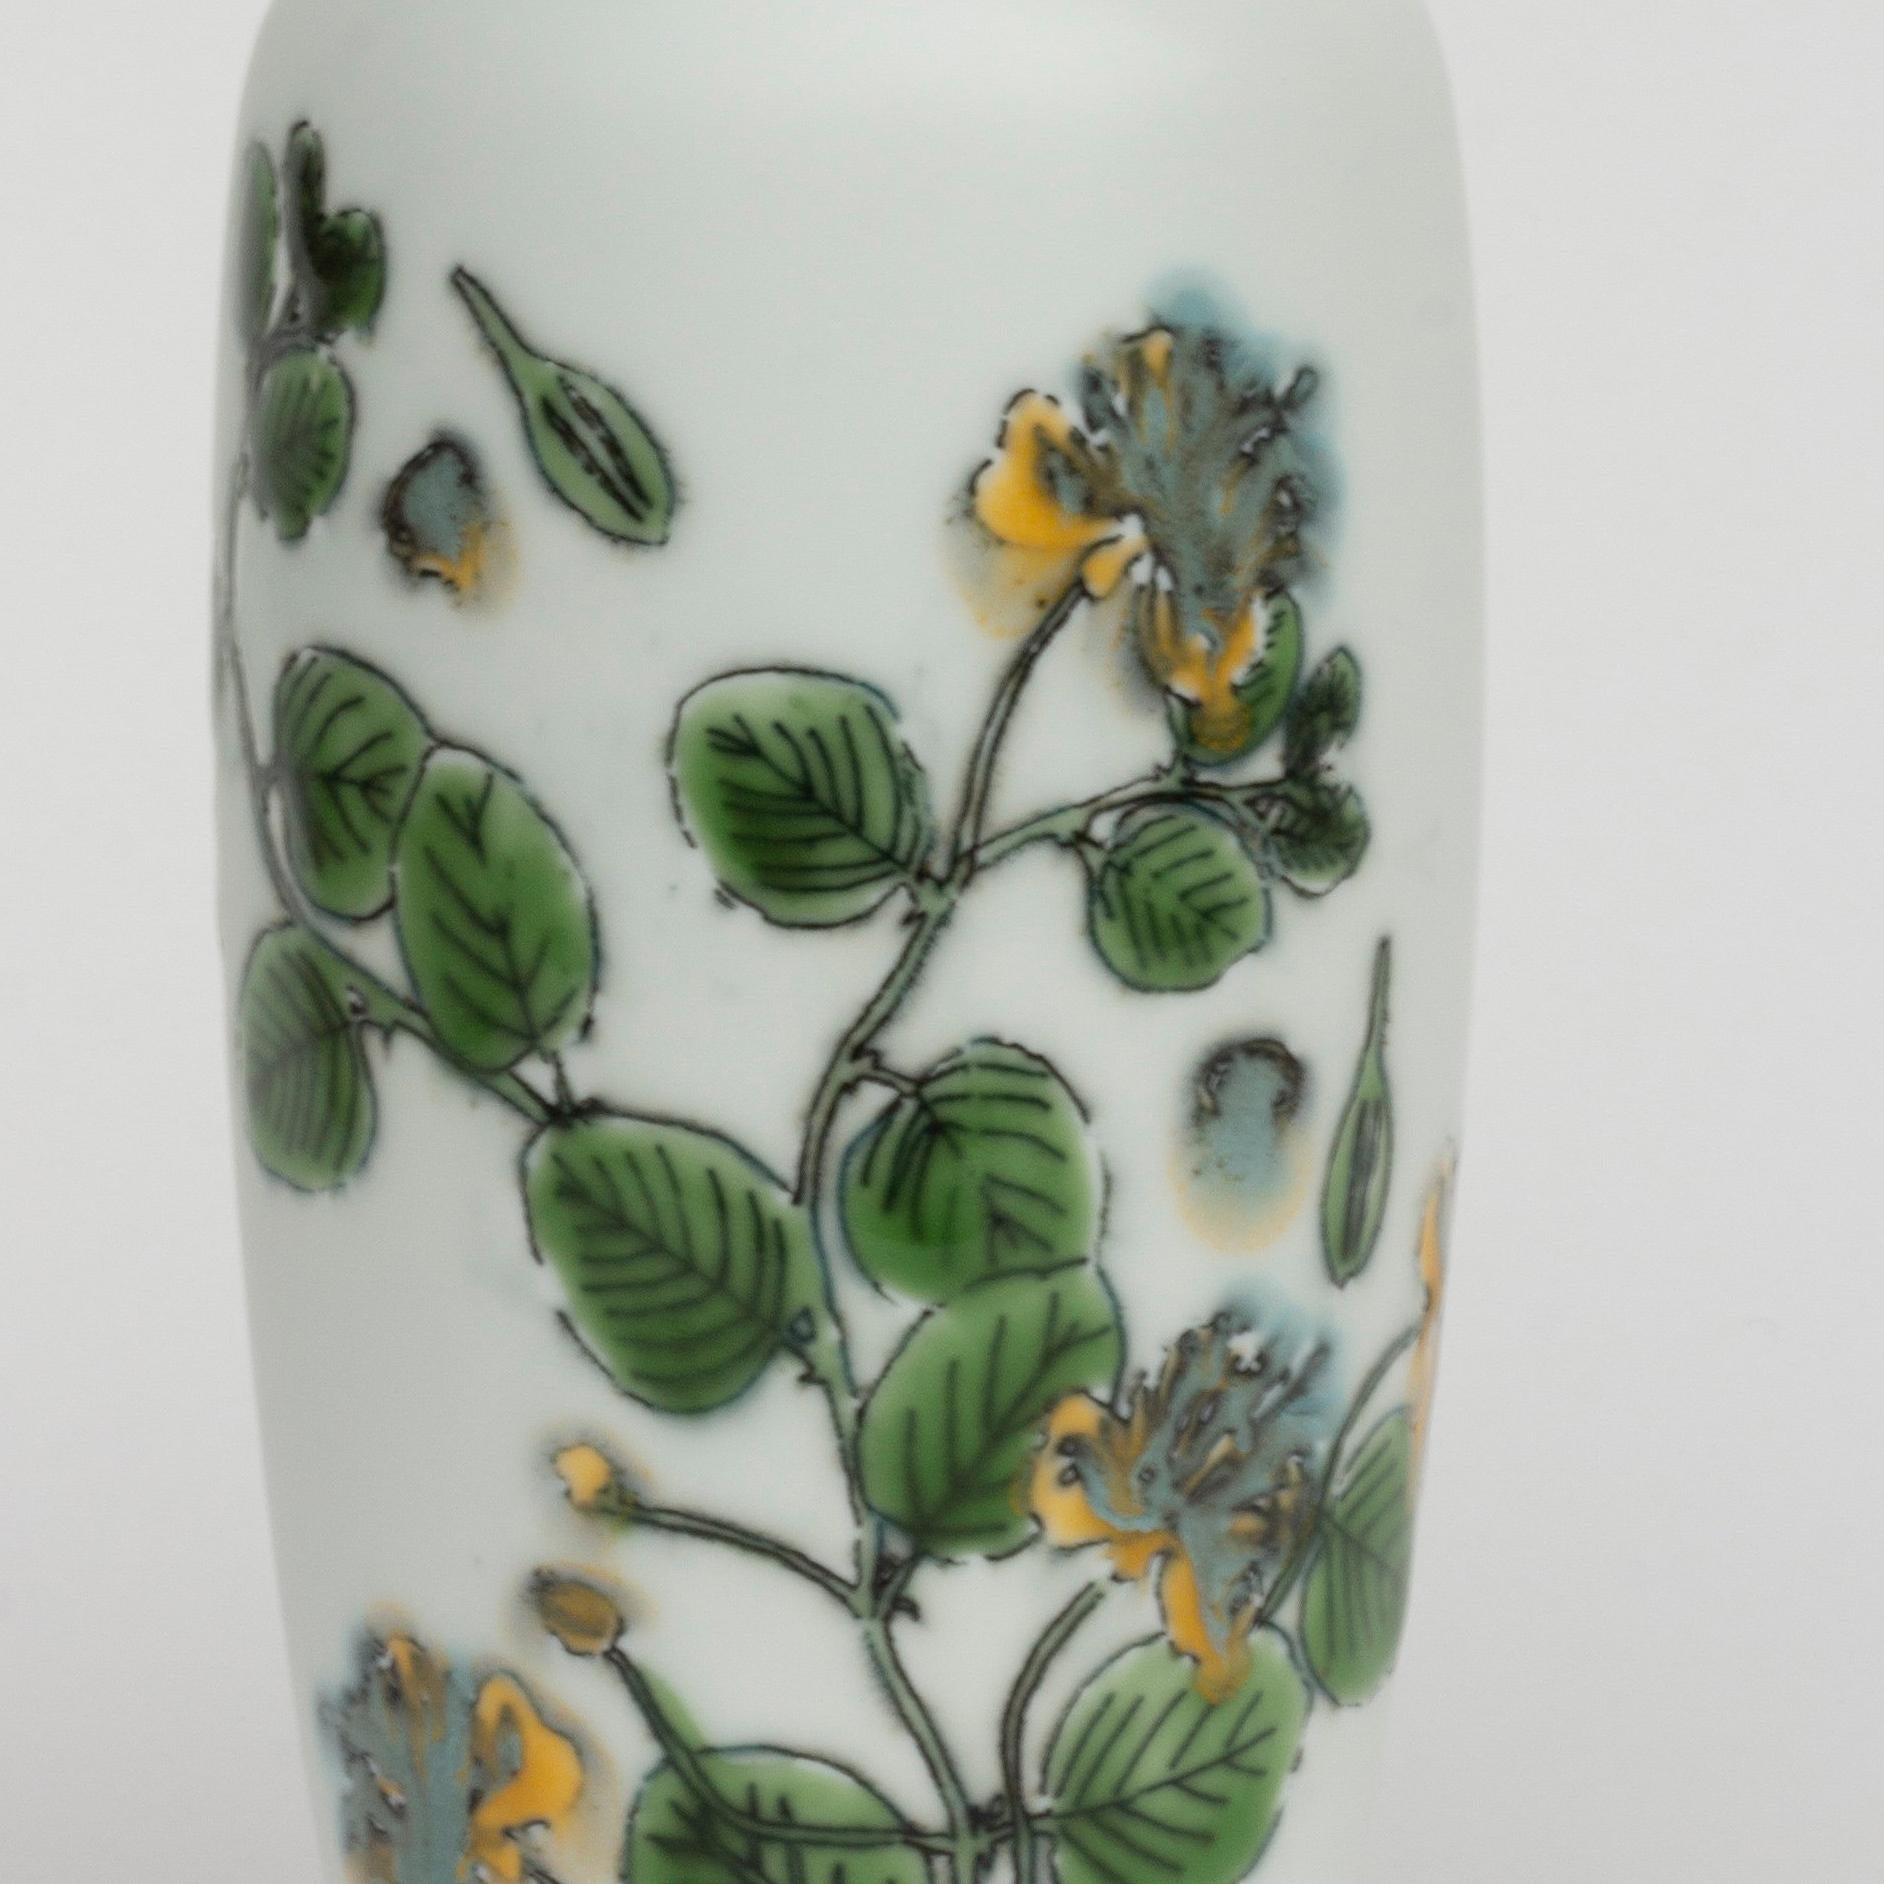 Bud Vase 1 - Contemporary Art by Future Retrieval (Katie Parker and Guy Michael Davis)